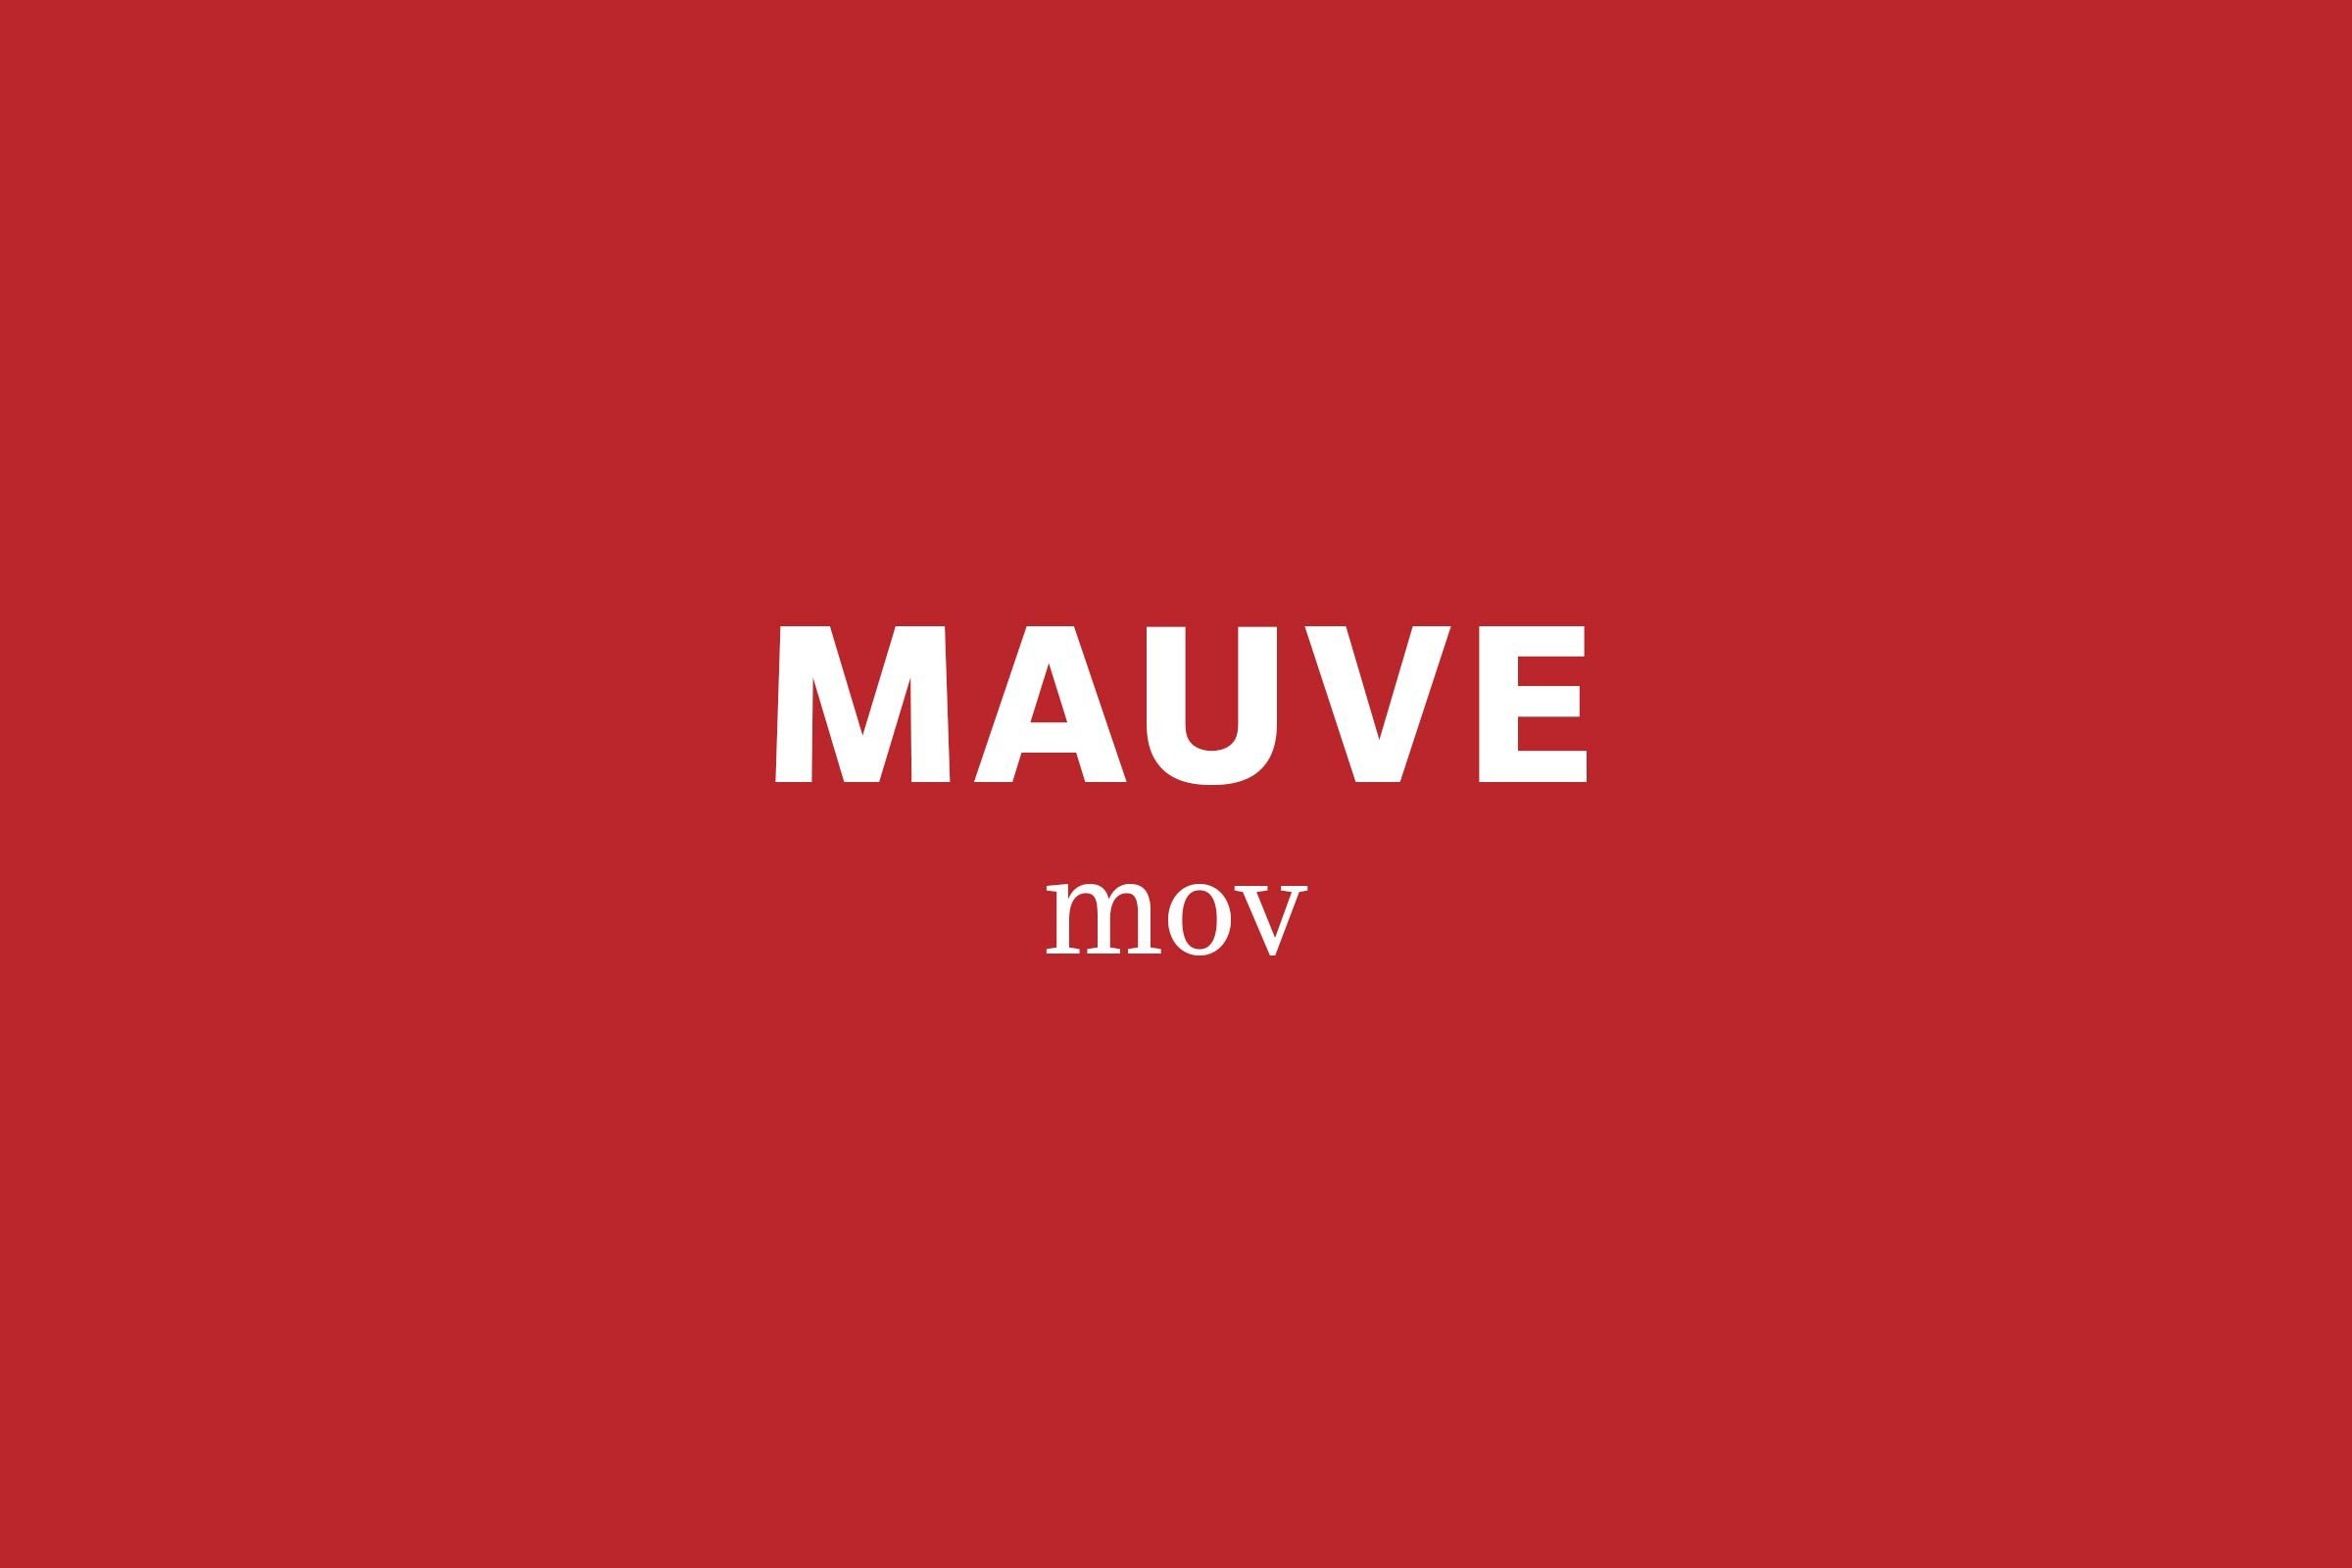 mauve pronunciation